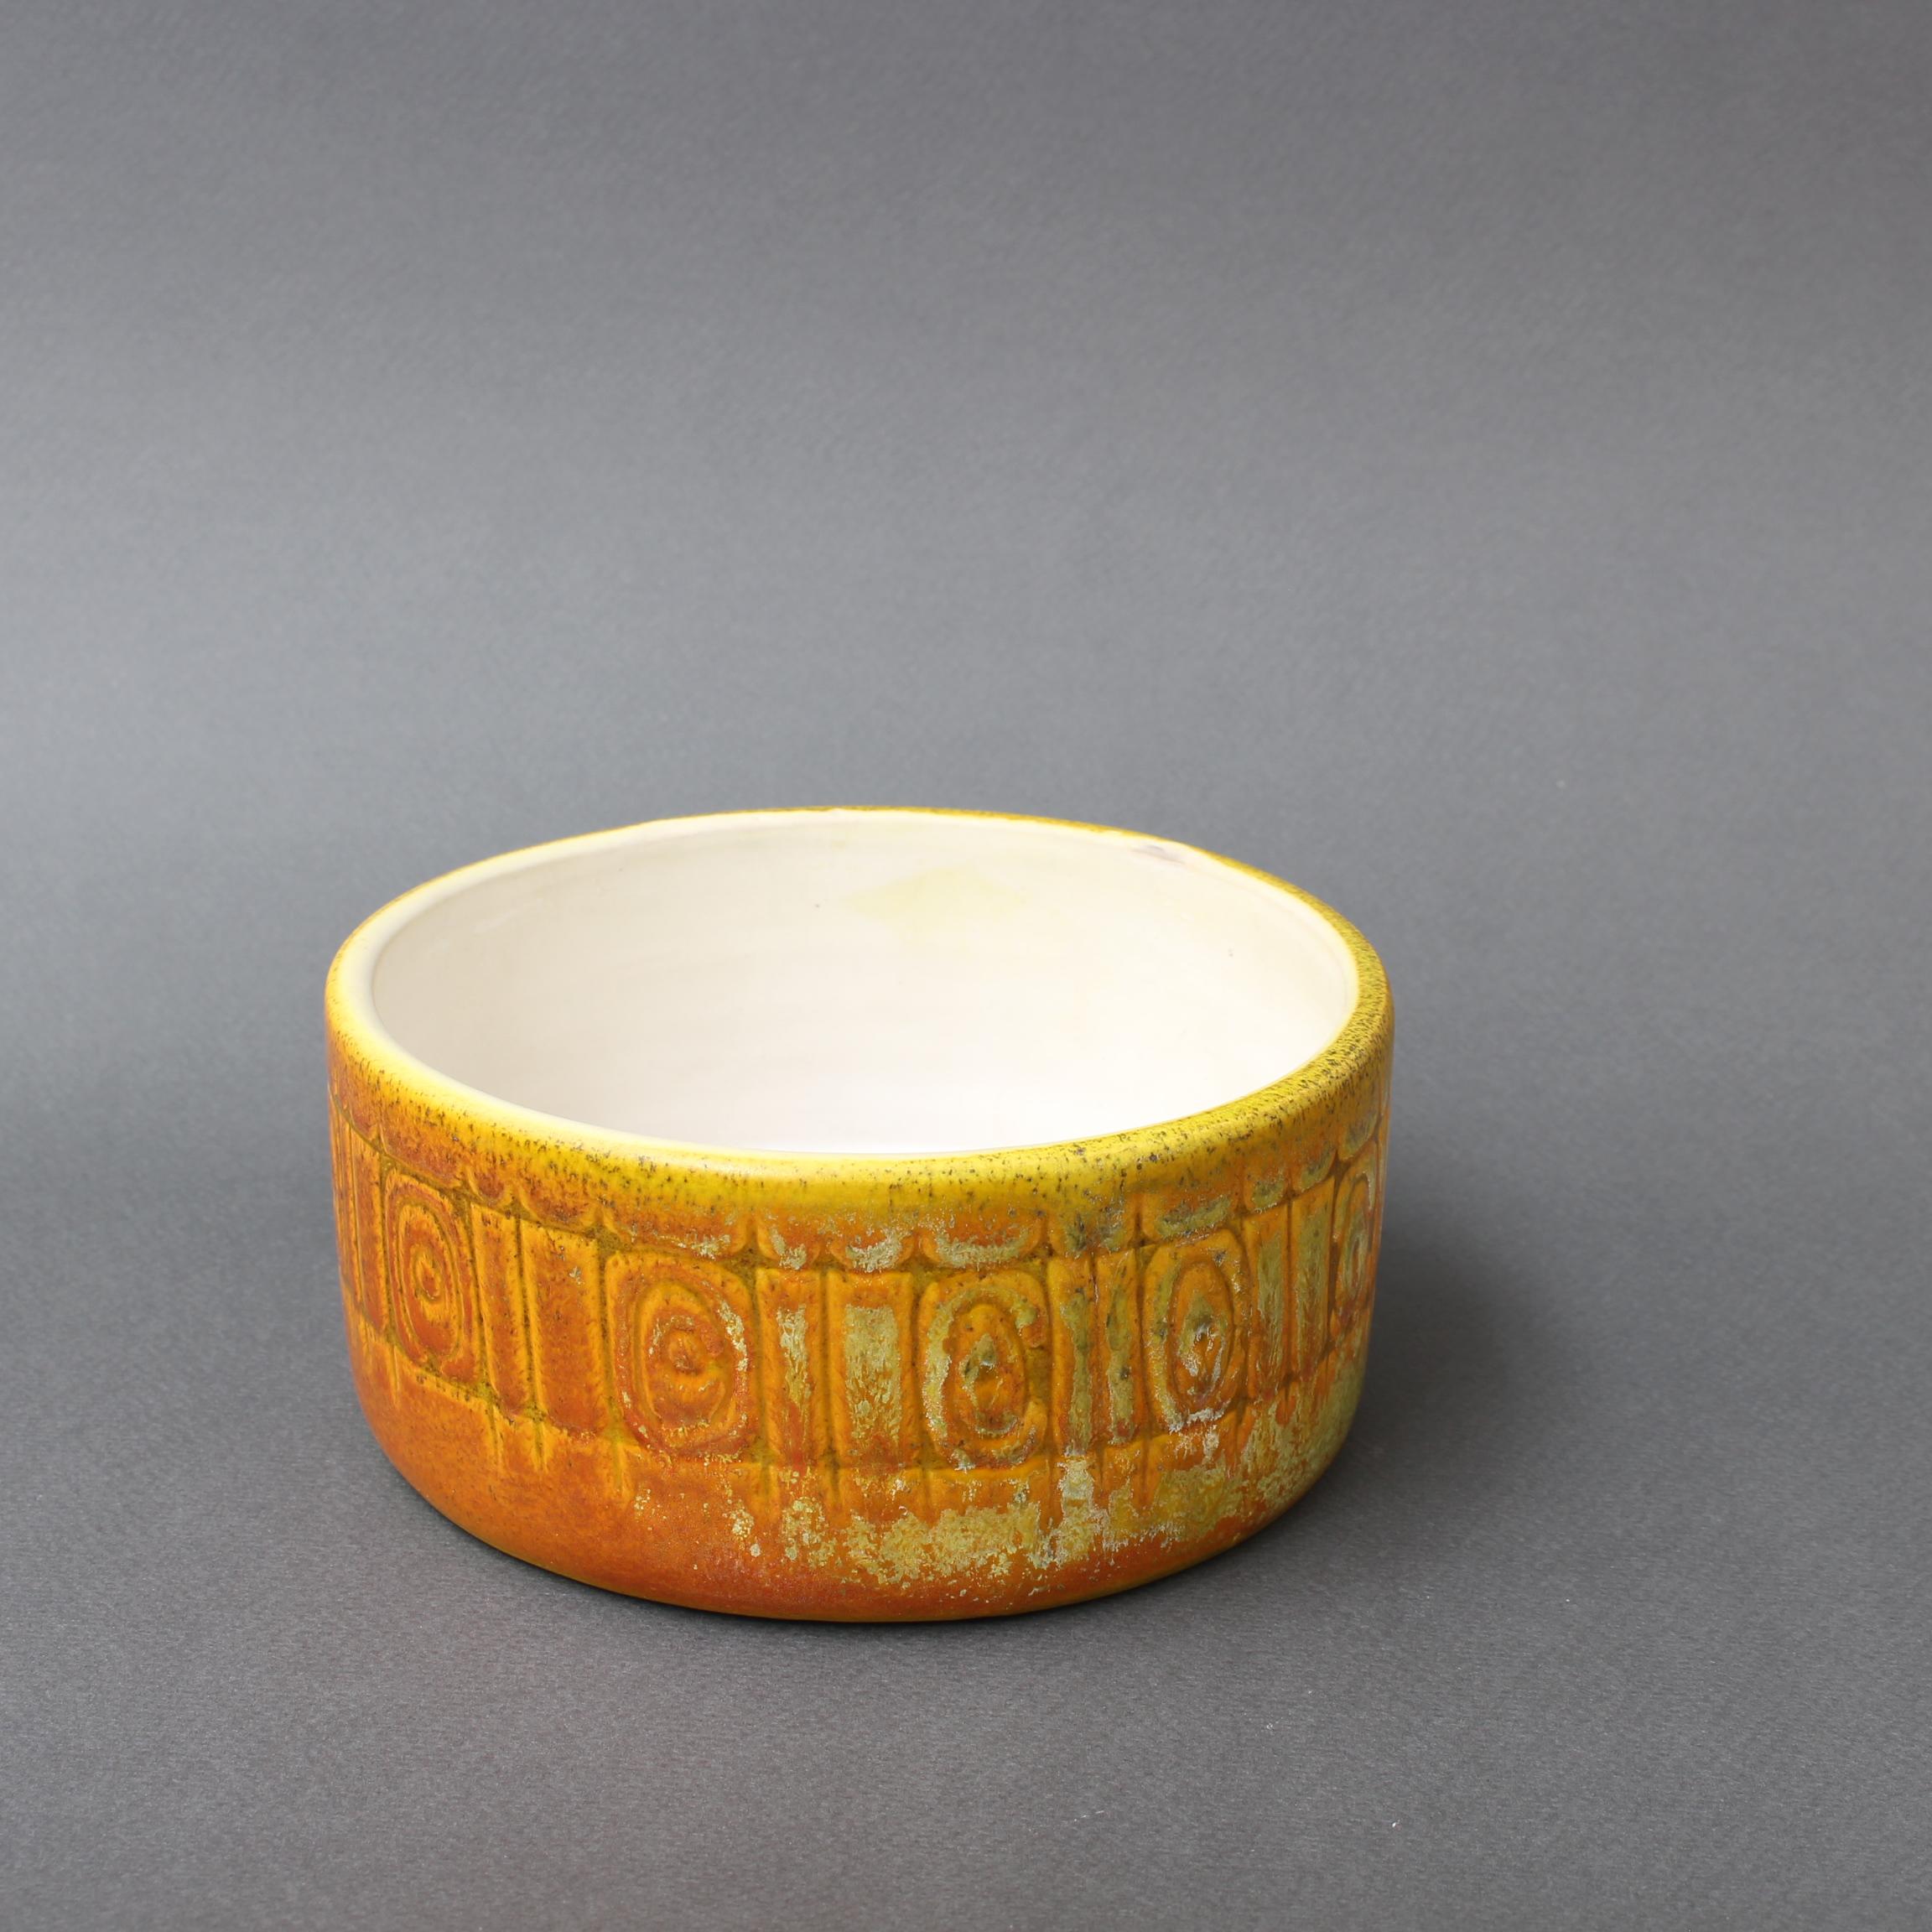 Vintage Italian Ceramic Bowl by Alessio Tasca '1962' For Sale 2